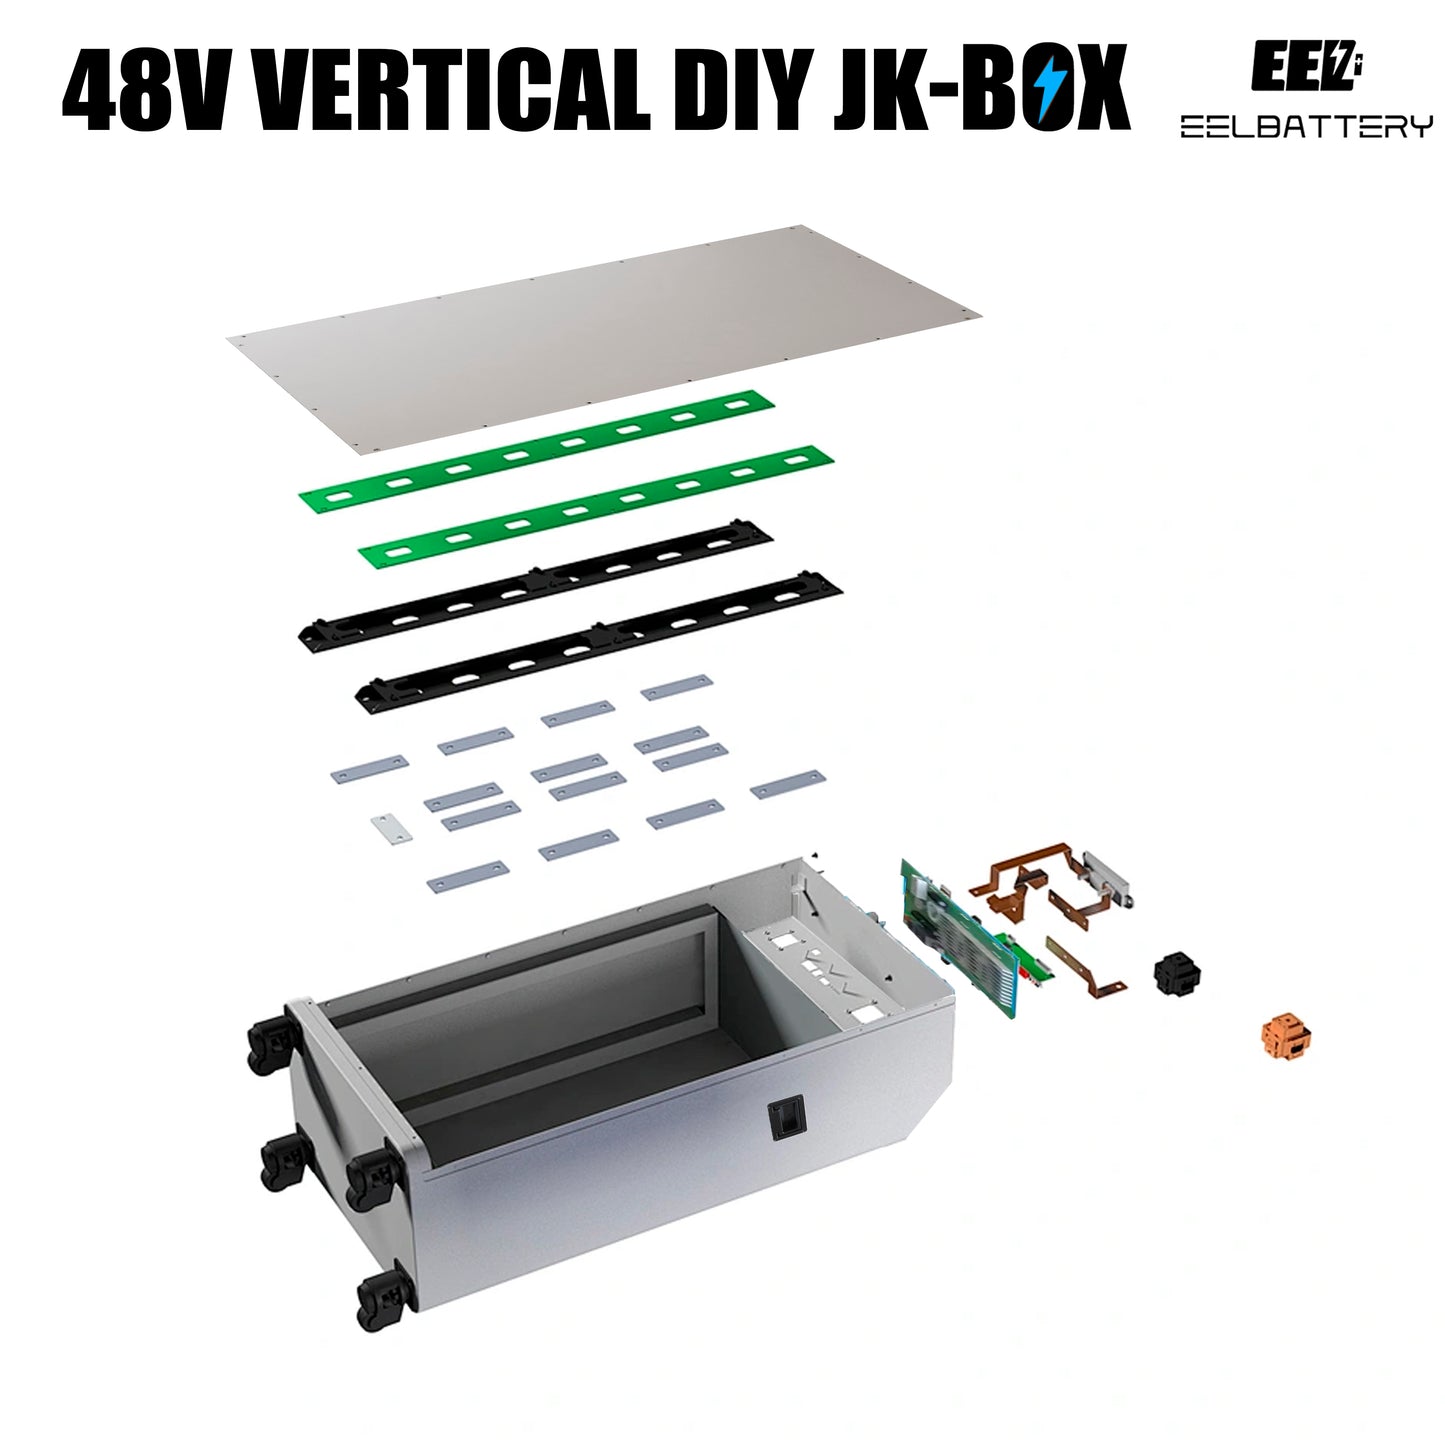 EEL 48V 16S DIY Vertical Battery Box DIY Kits with JK Inverter BMS and Wheels